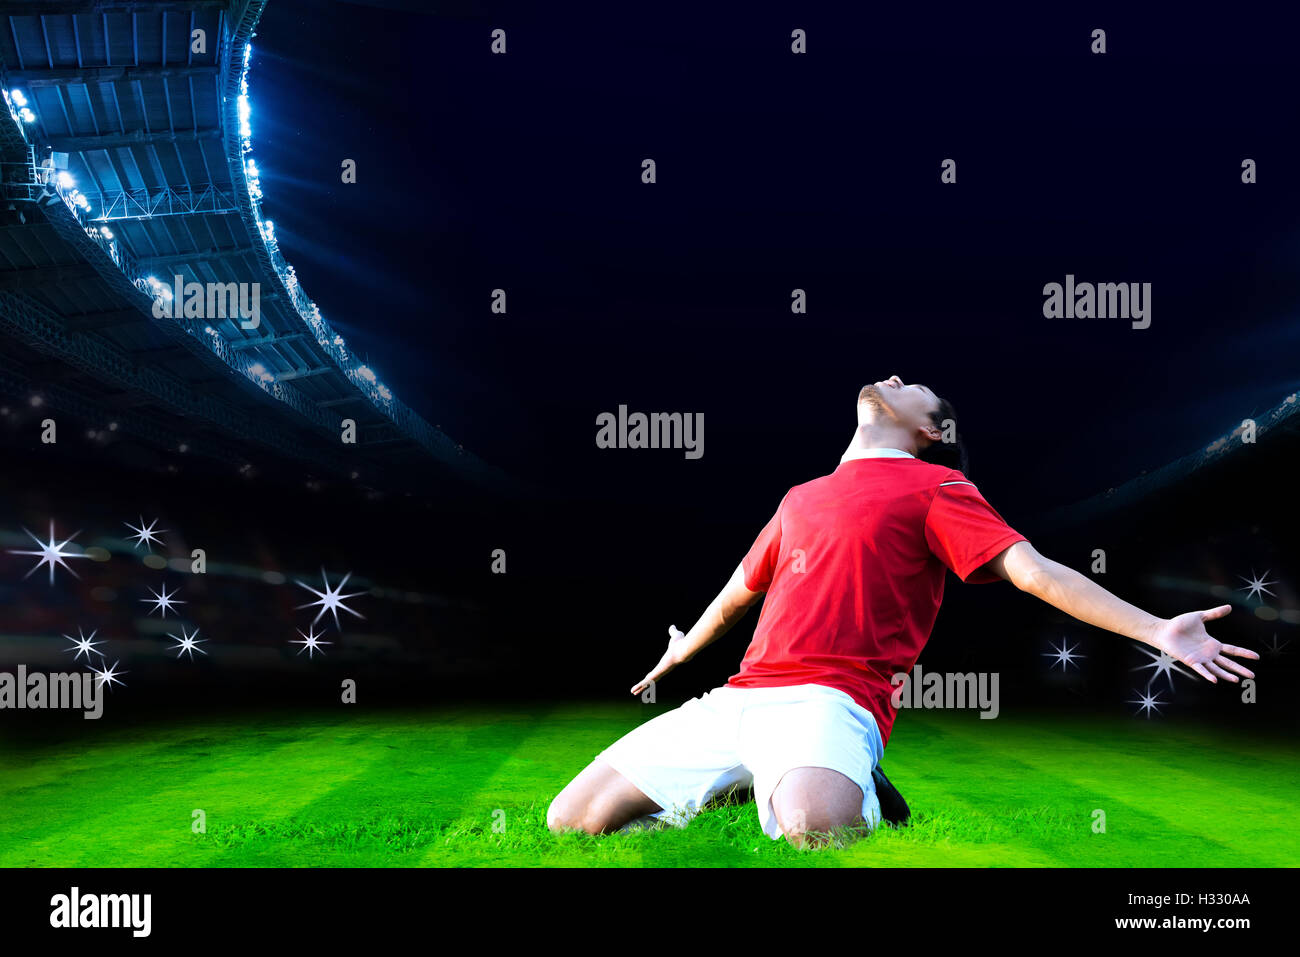 Soccer player celebrating goal on field of stadium Stock Photo